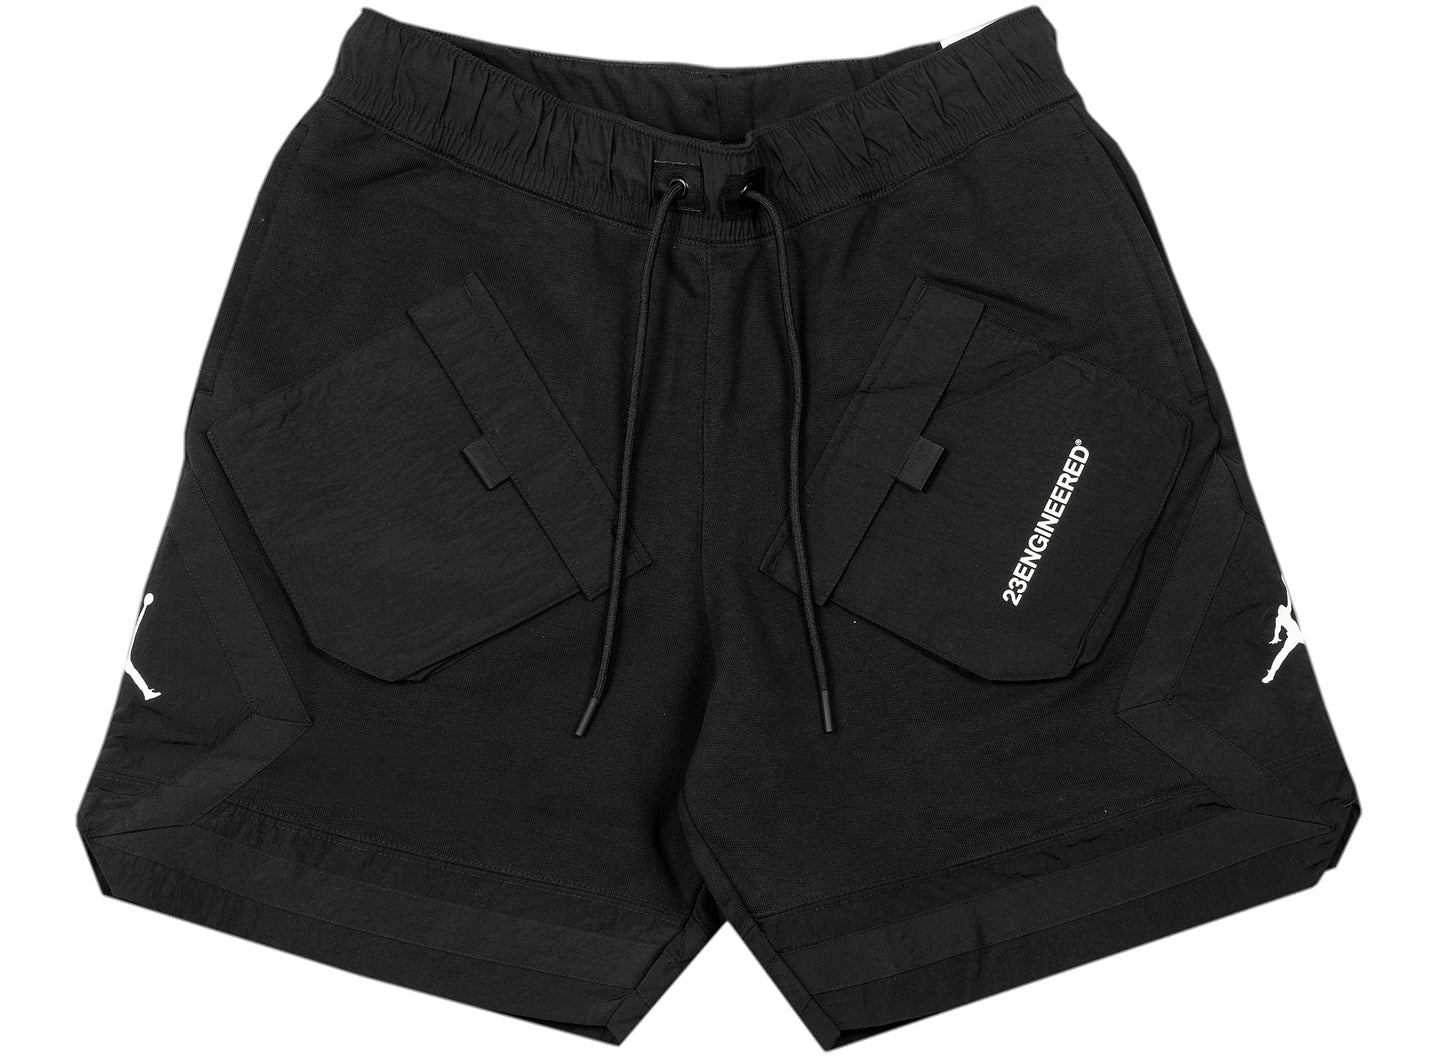 Jordan 23 Engineered Fleece Shorts in Black